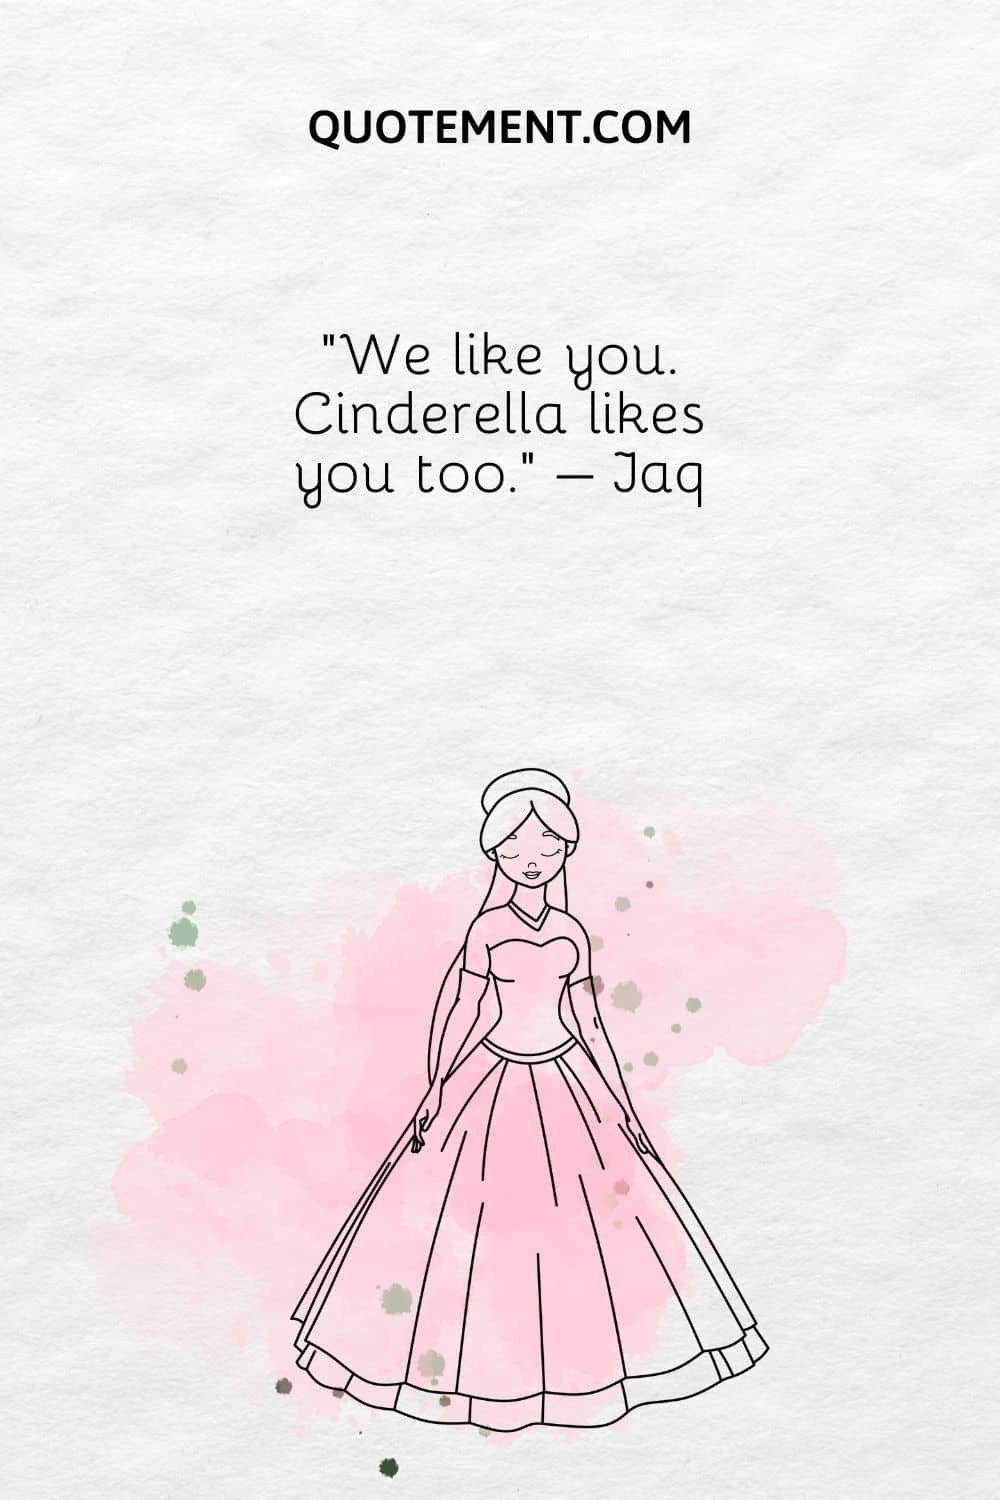 We like you. Cinderelly likes you too